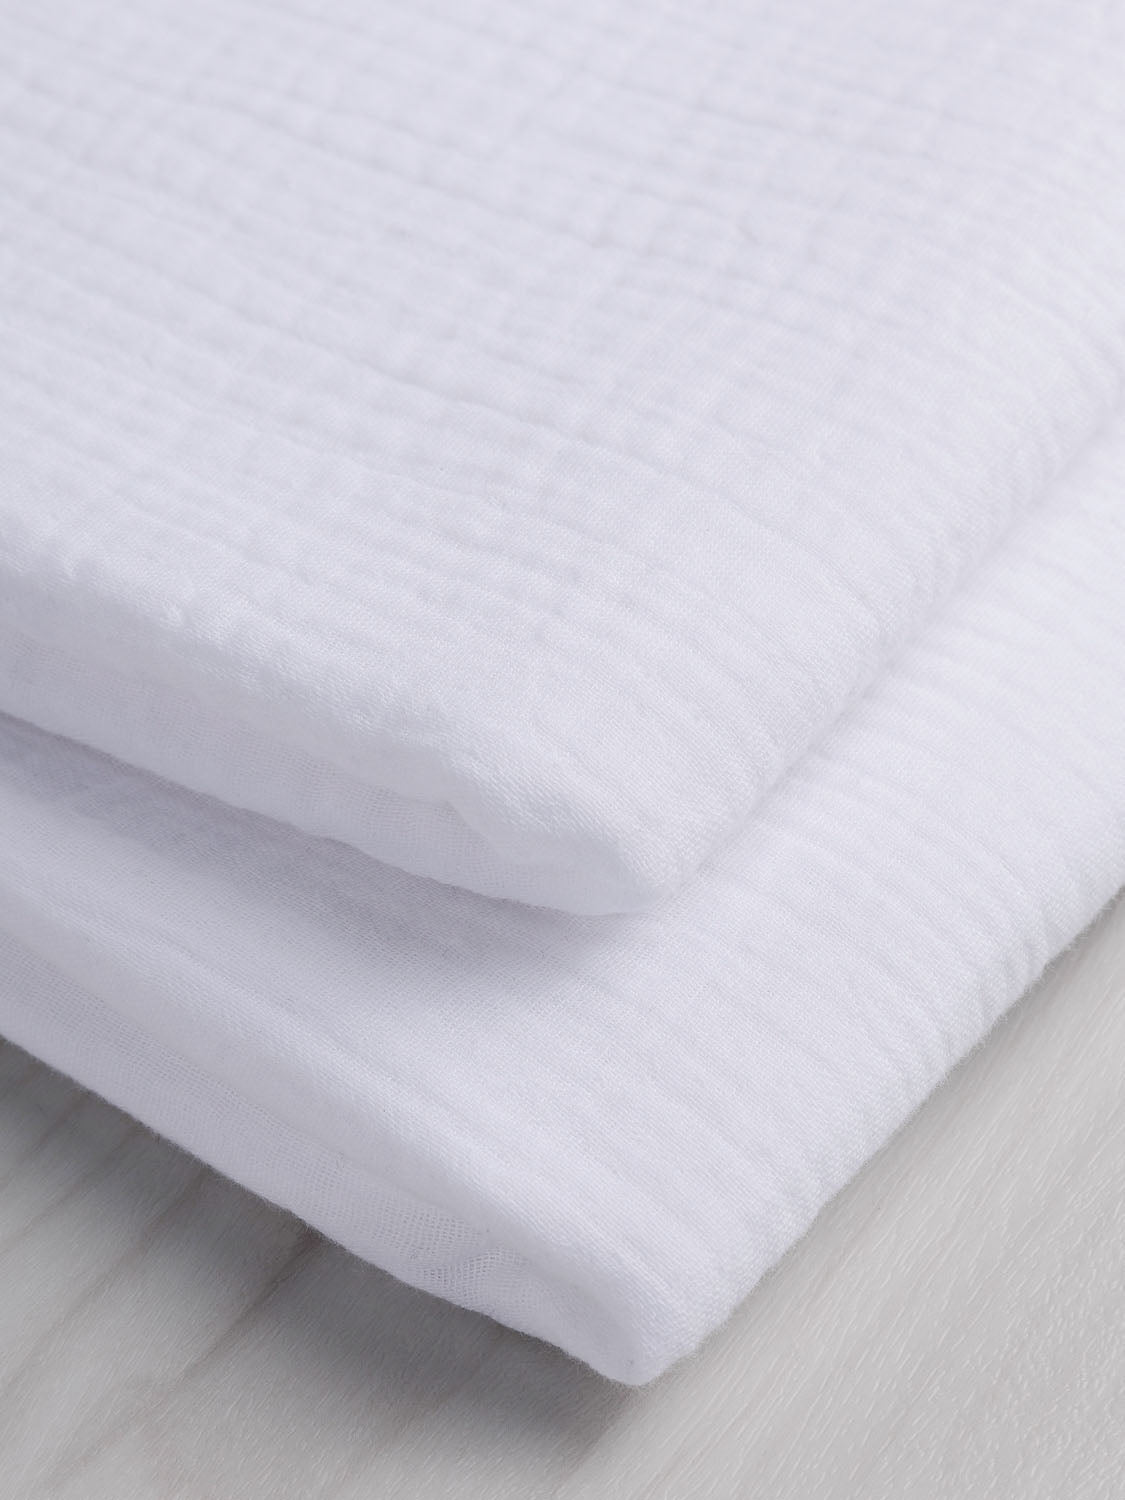 20 Yards of Soft Cotton Fabric, Muslin Fabric, Voile Fabric, White Cotton  Fabric, Indian Fabric 